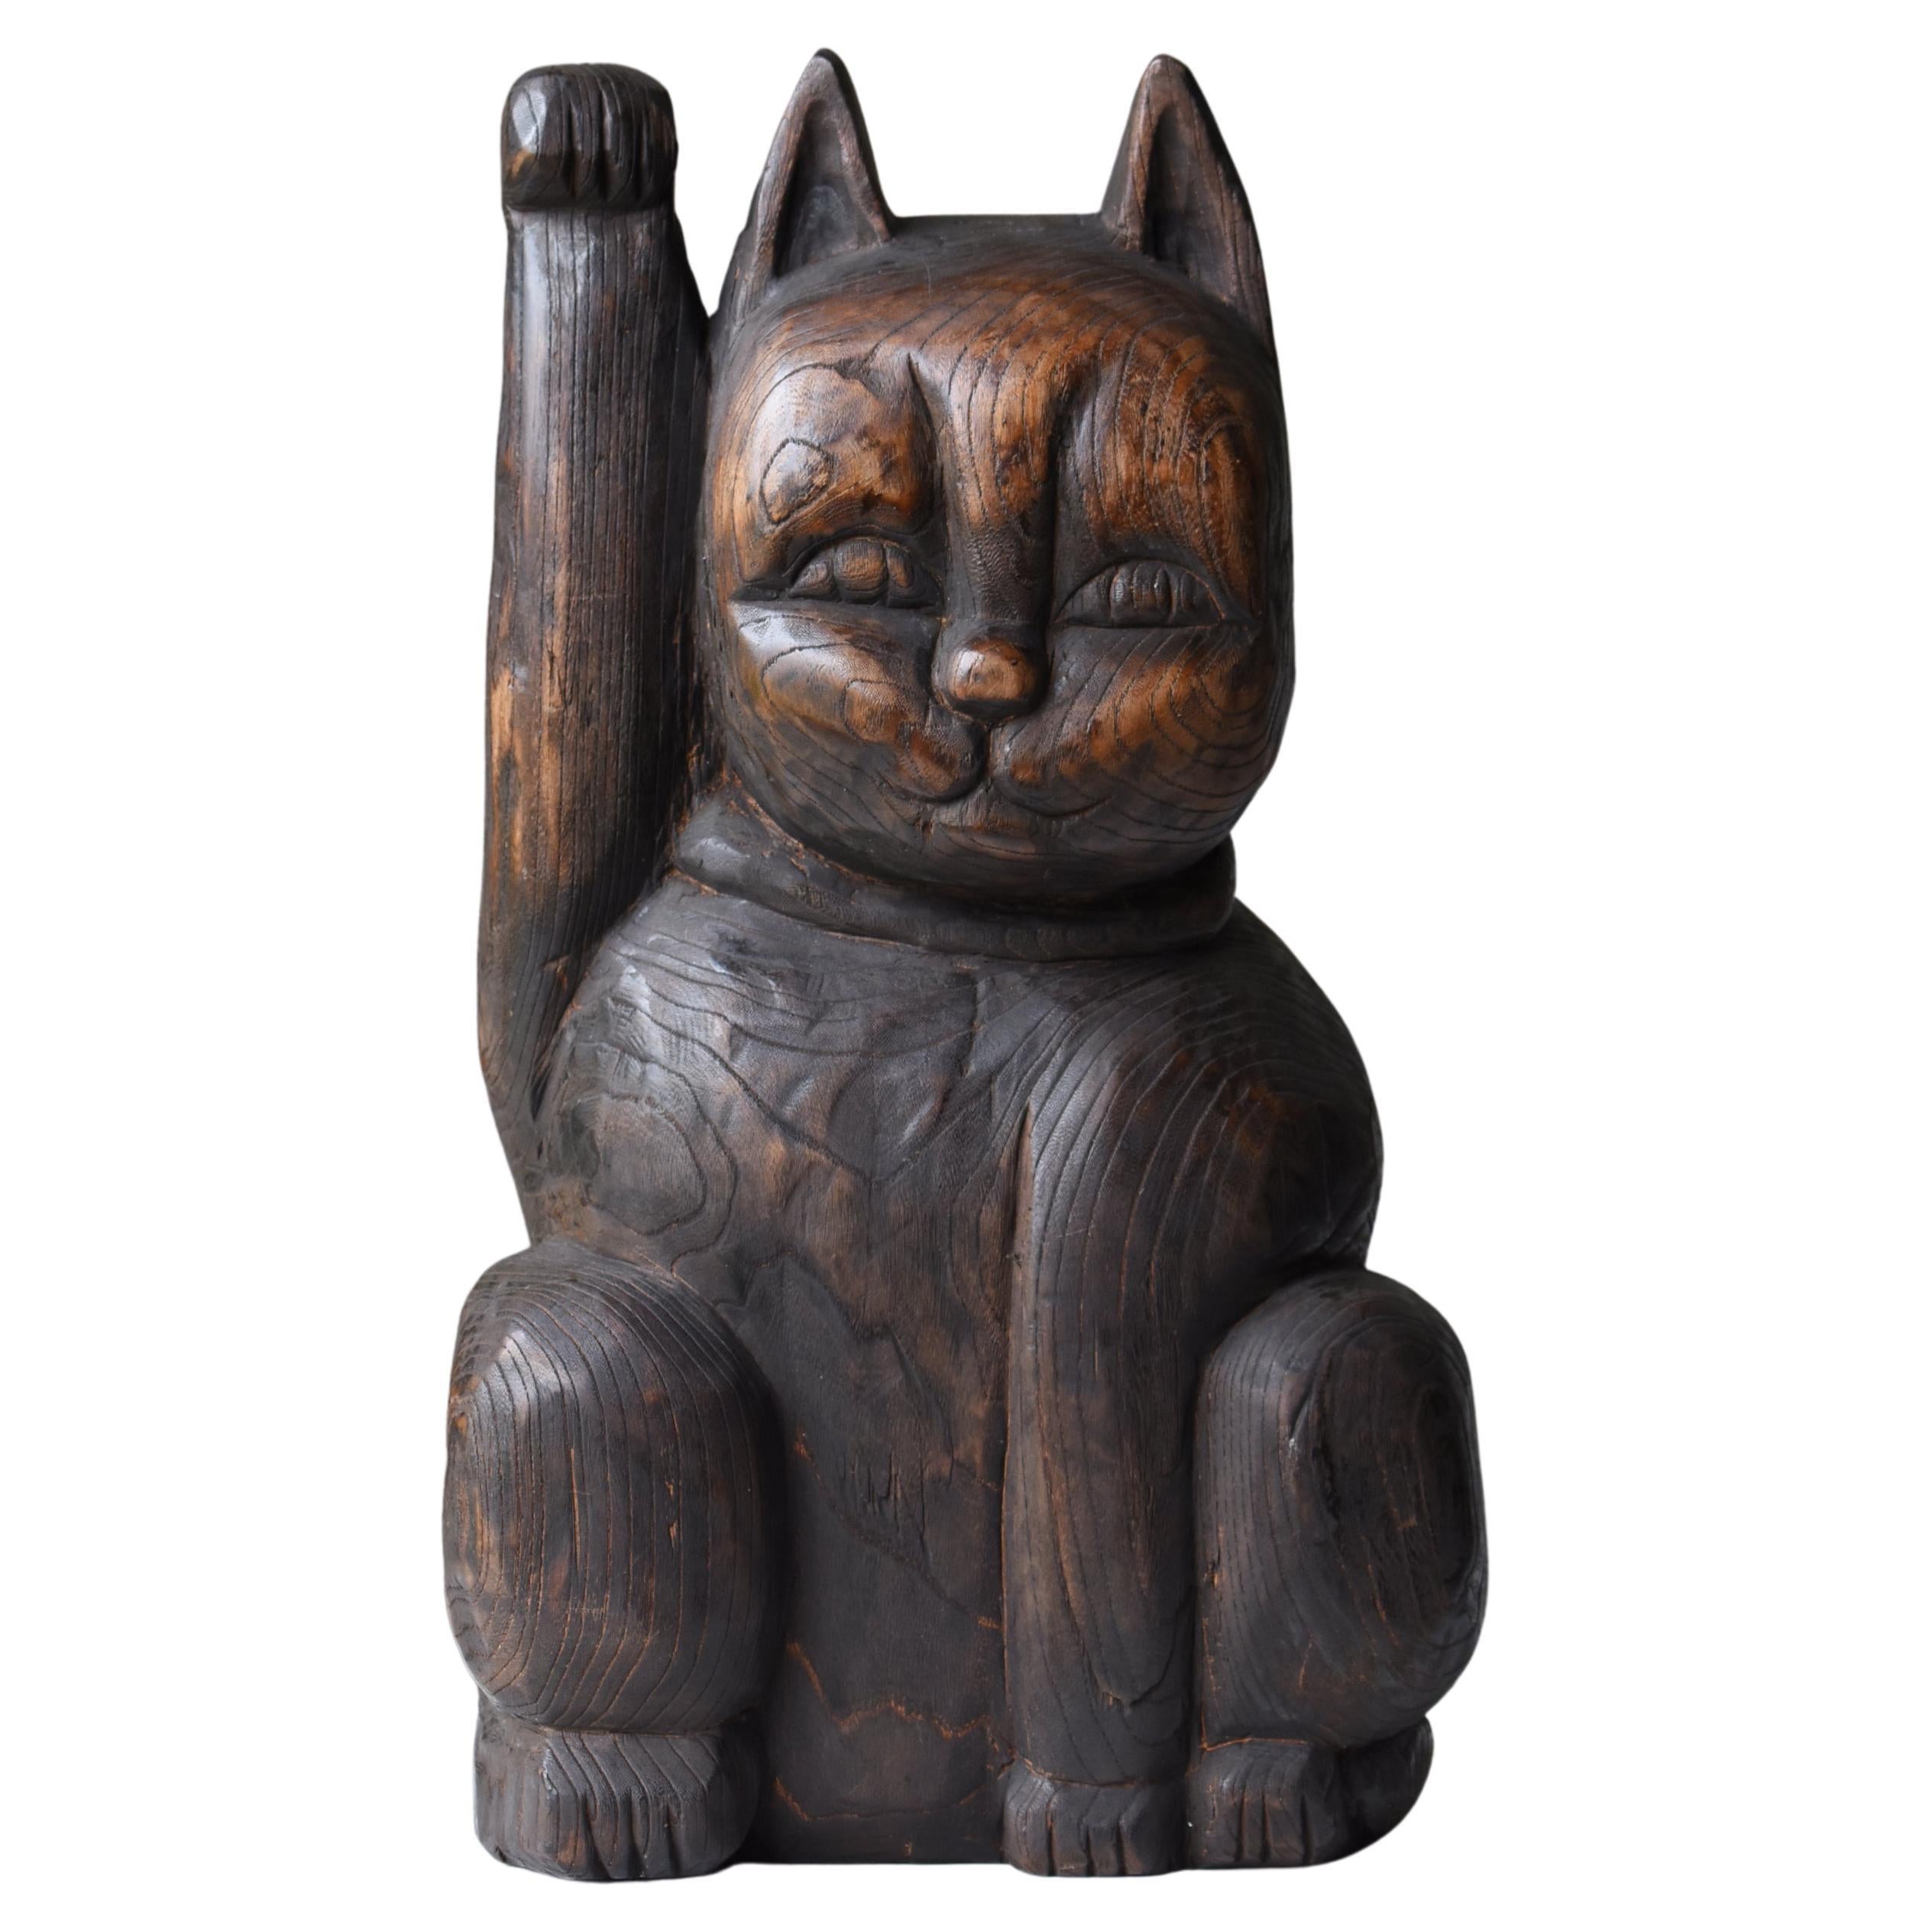 Japanese antique Wood Carving large Maneki Neko 1900s-1940s/Beckoning Cat mingei